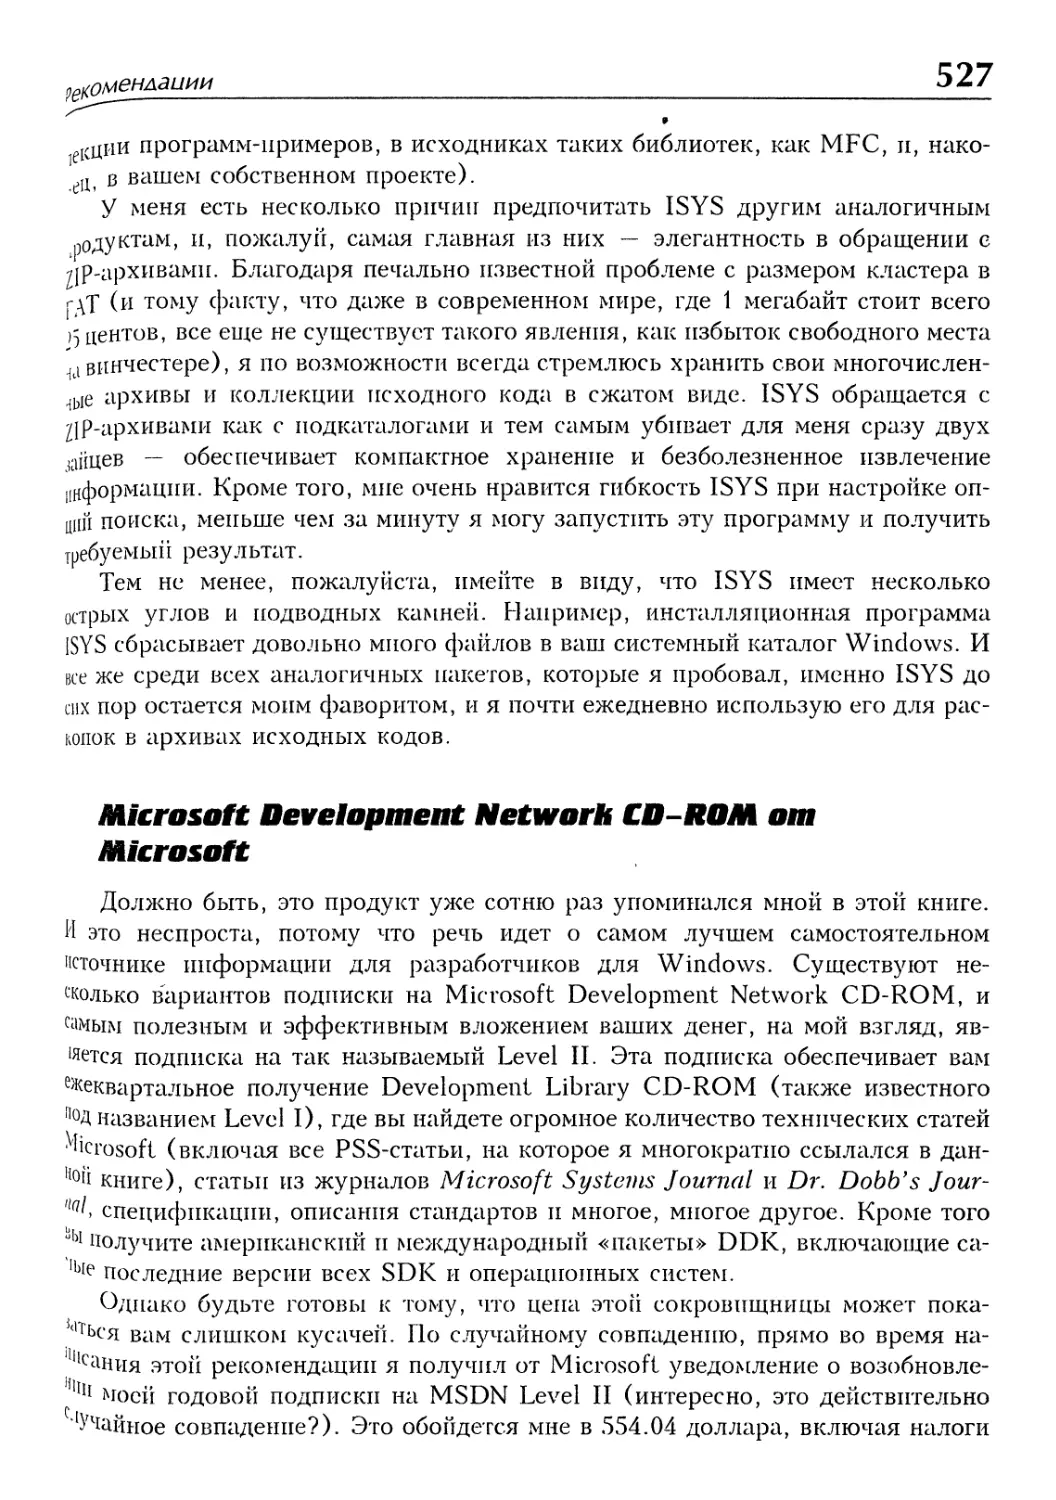 Microsoft Development Network CD-ROM от Microsoft